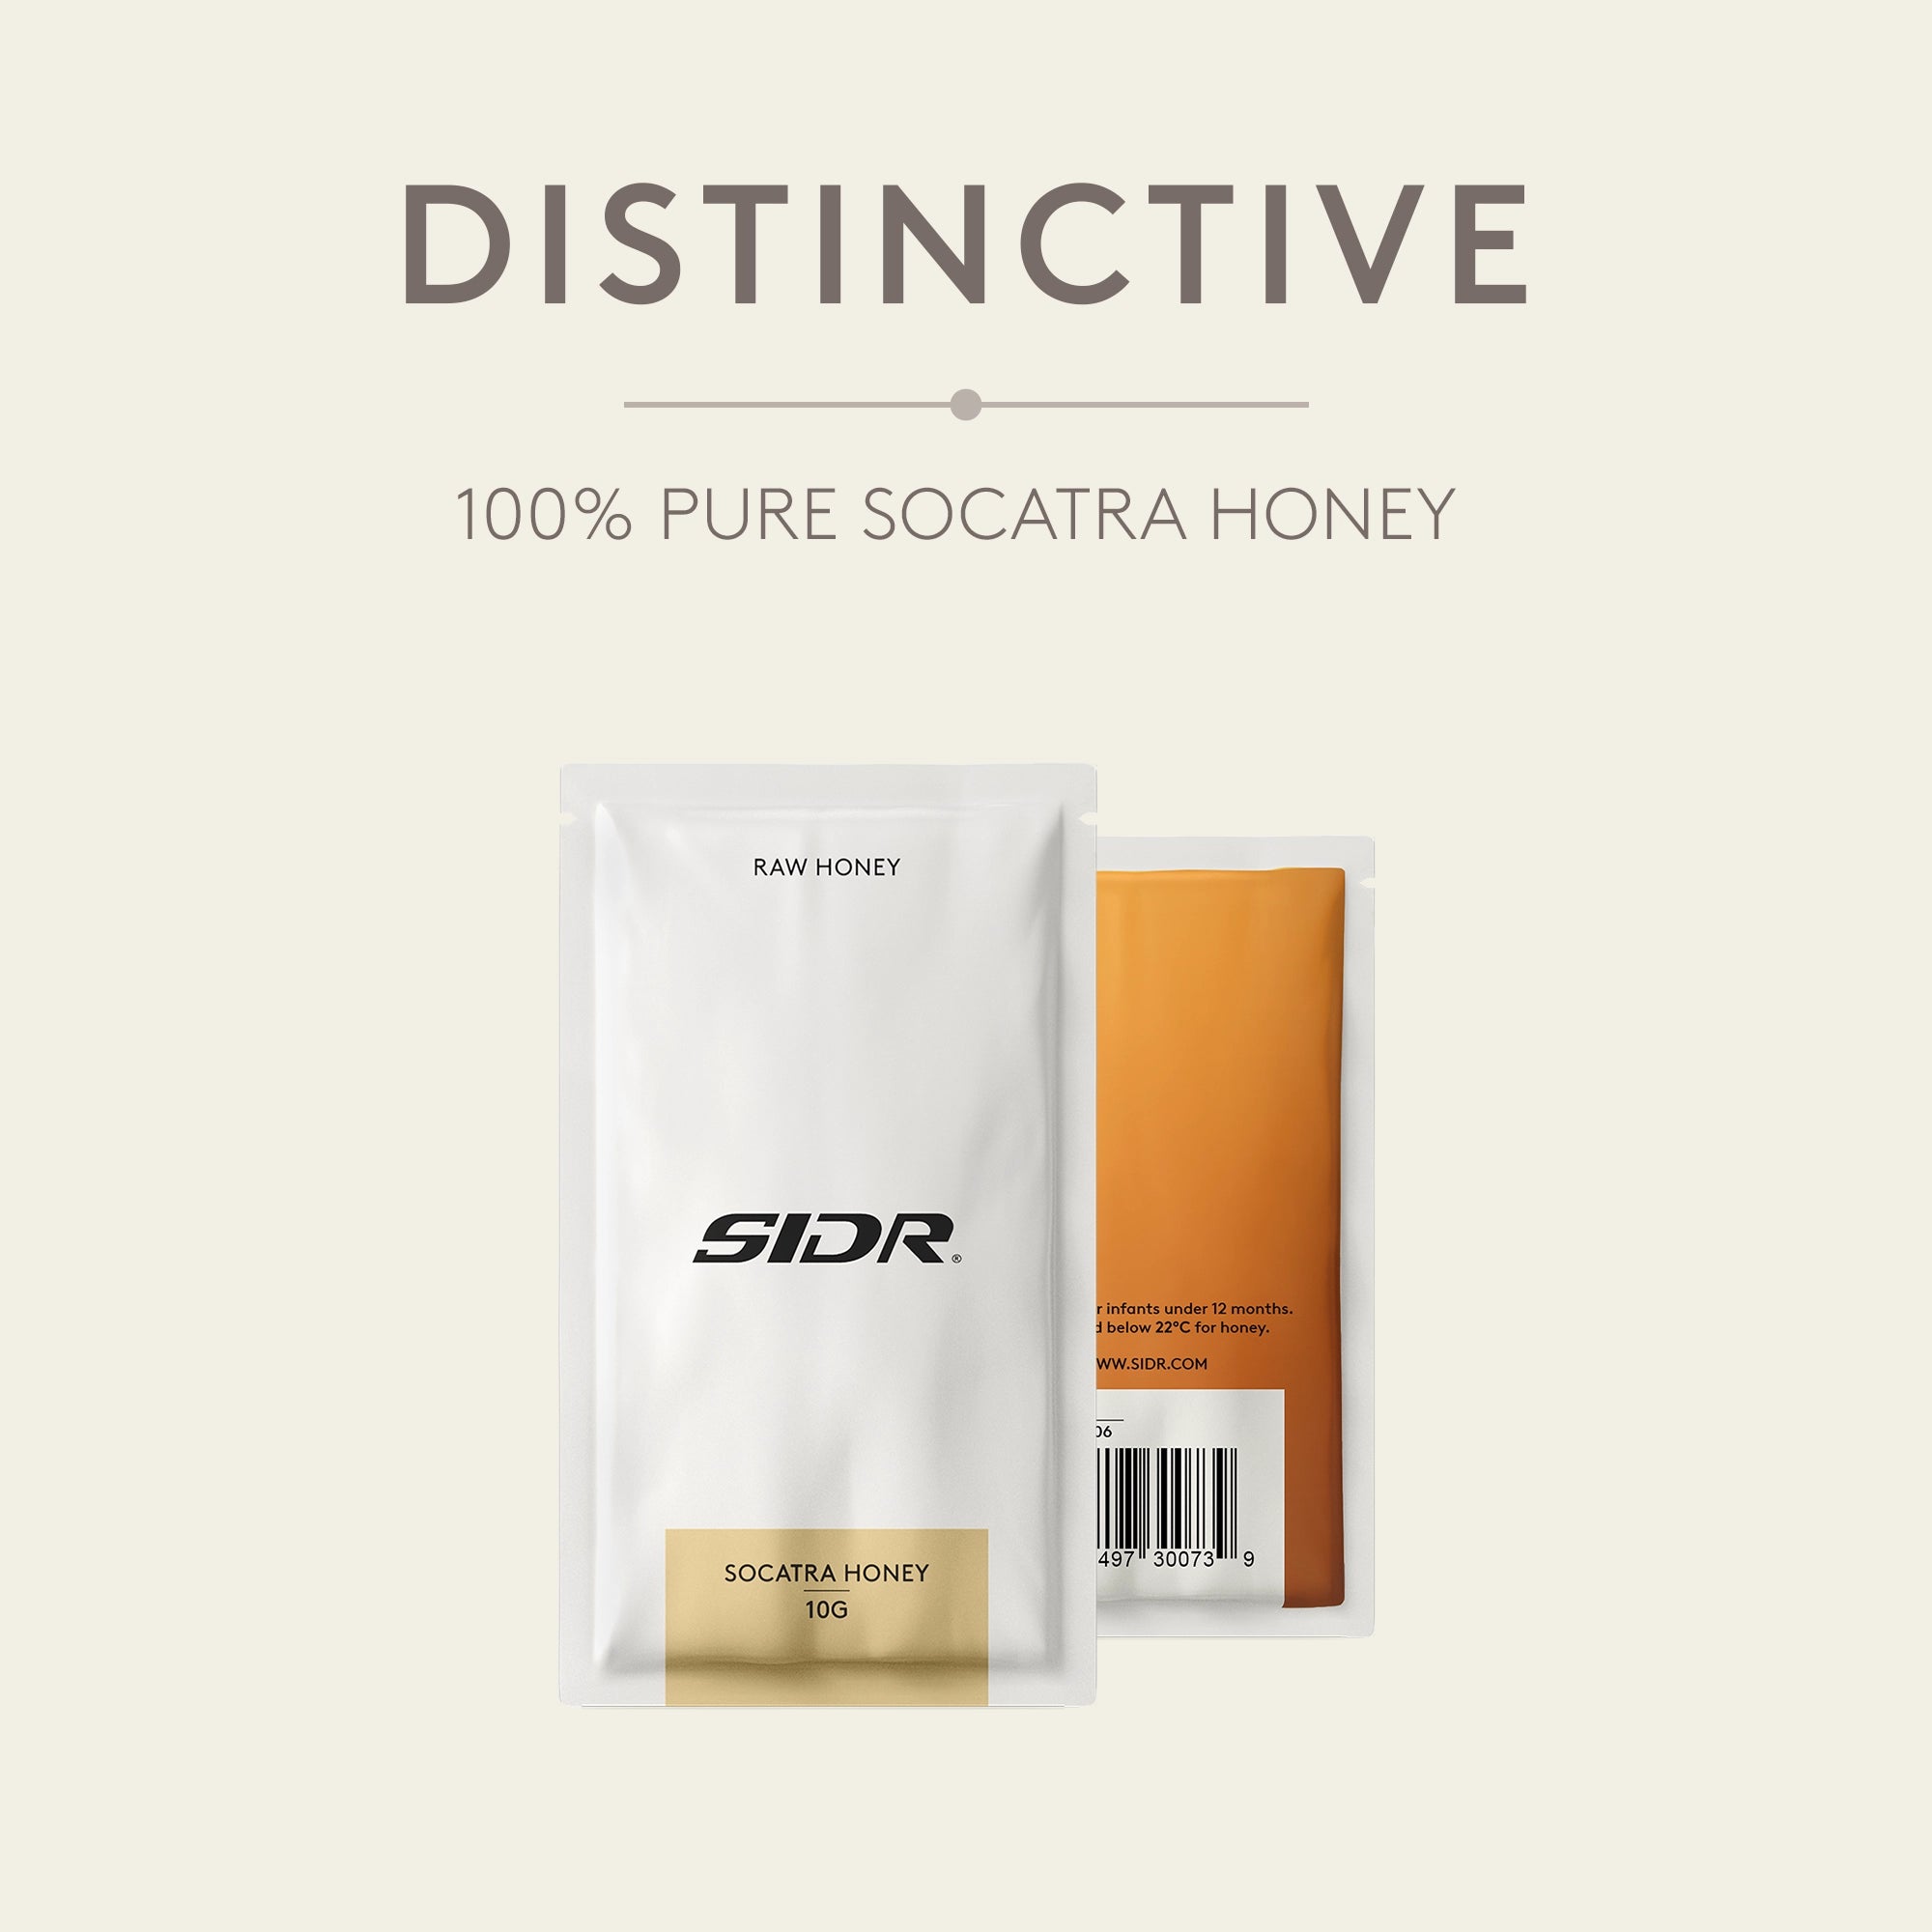 socatra honey packet distinctive